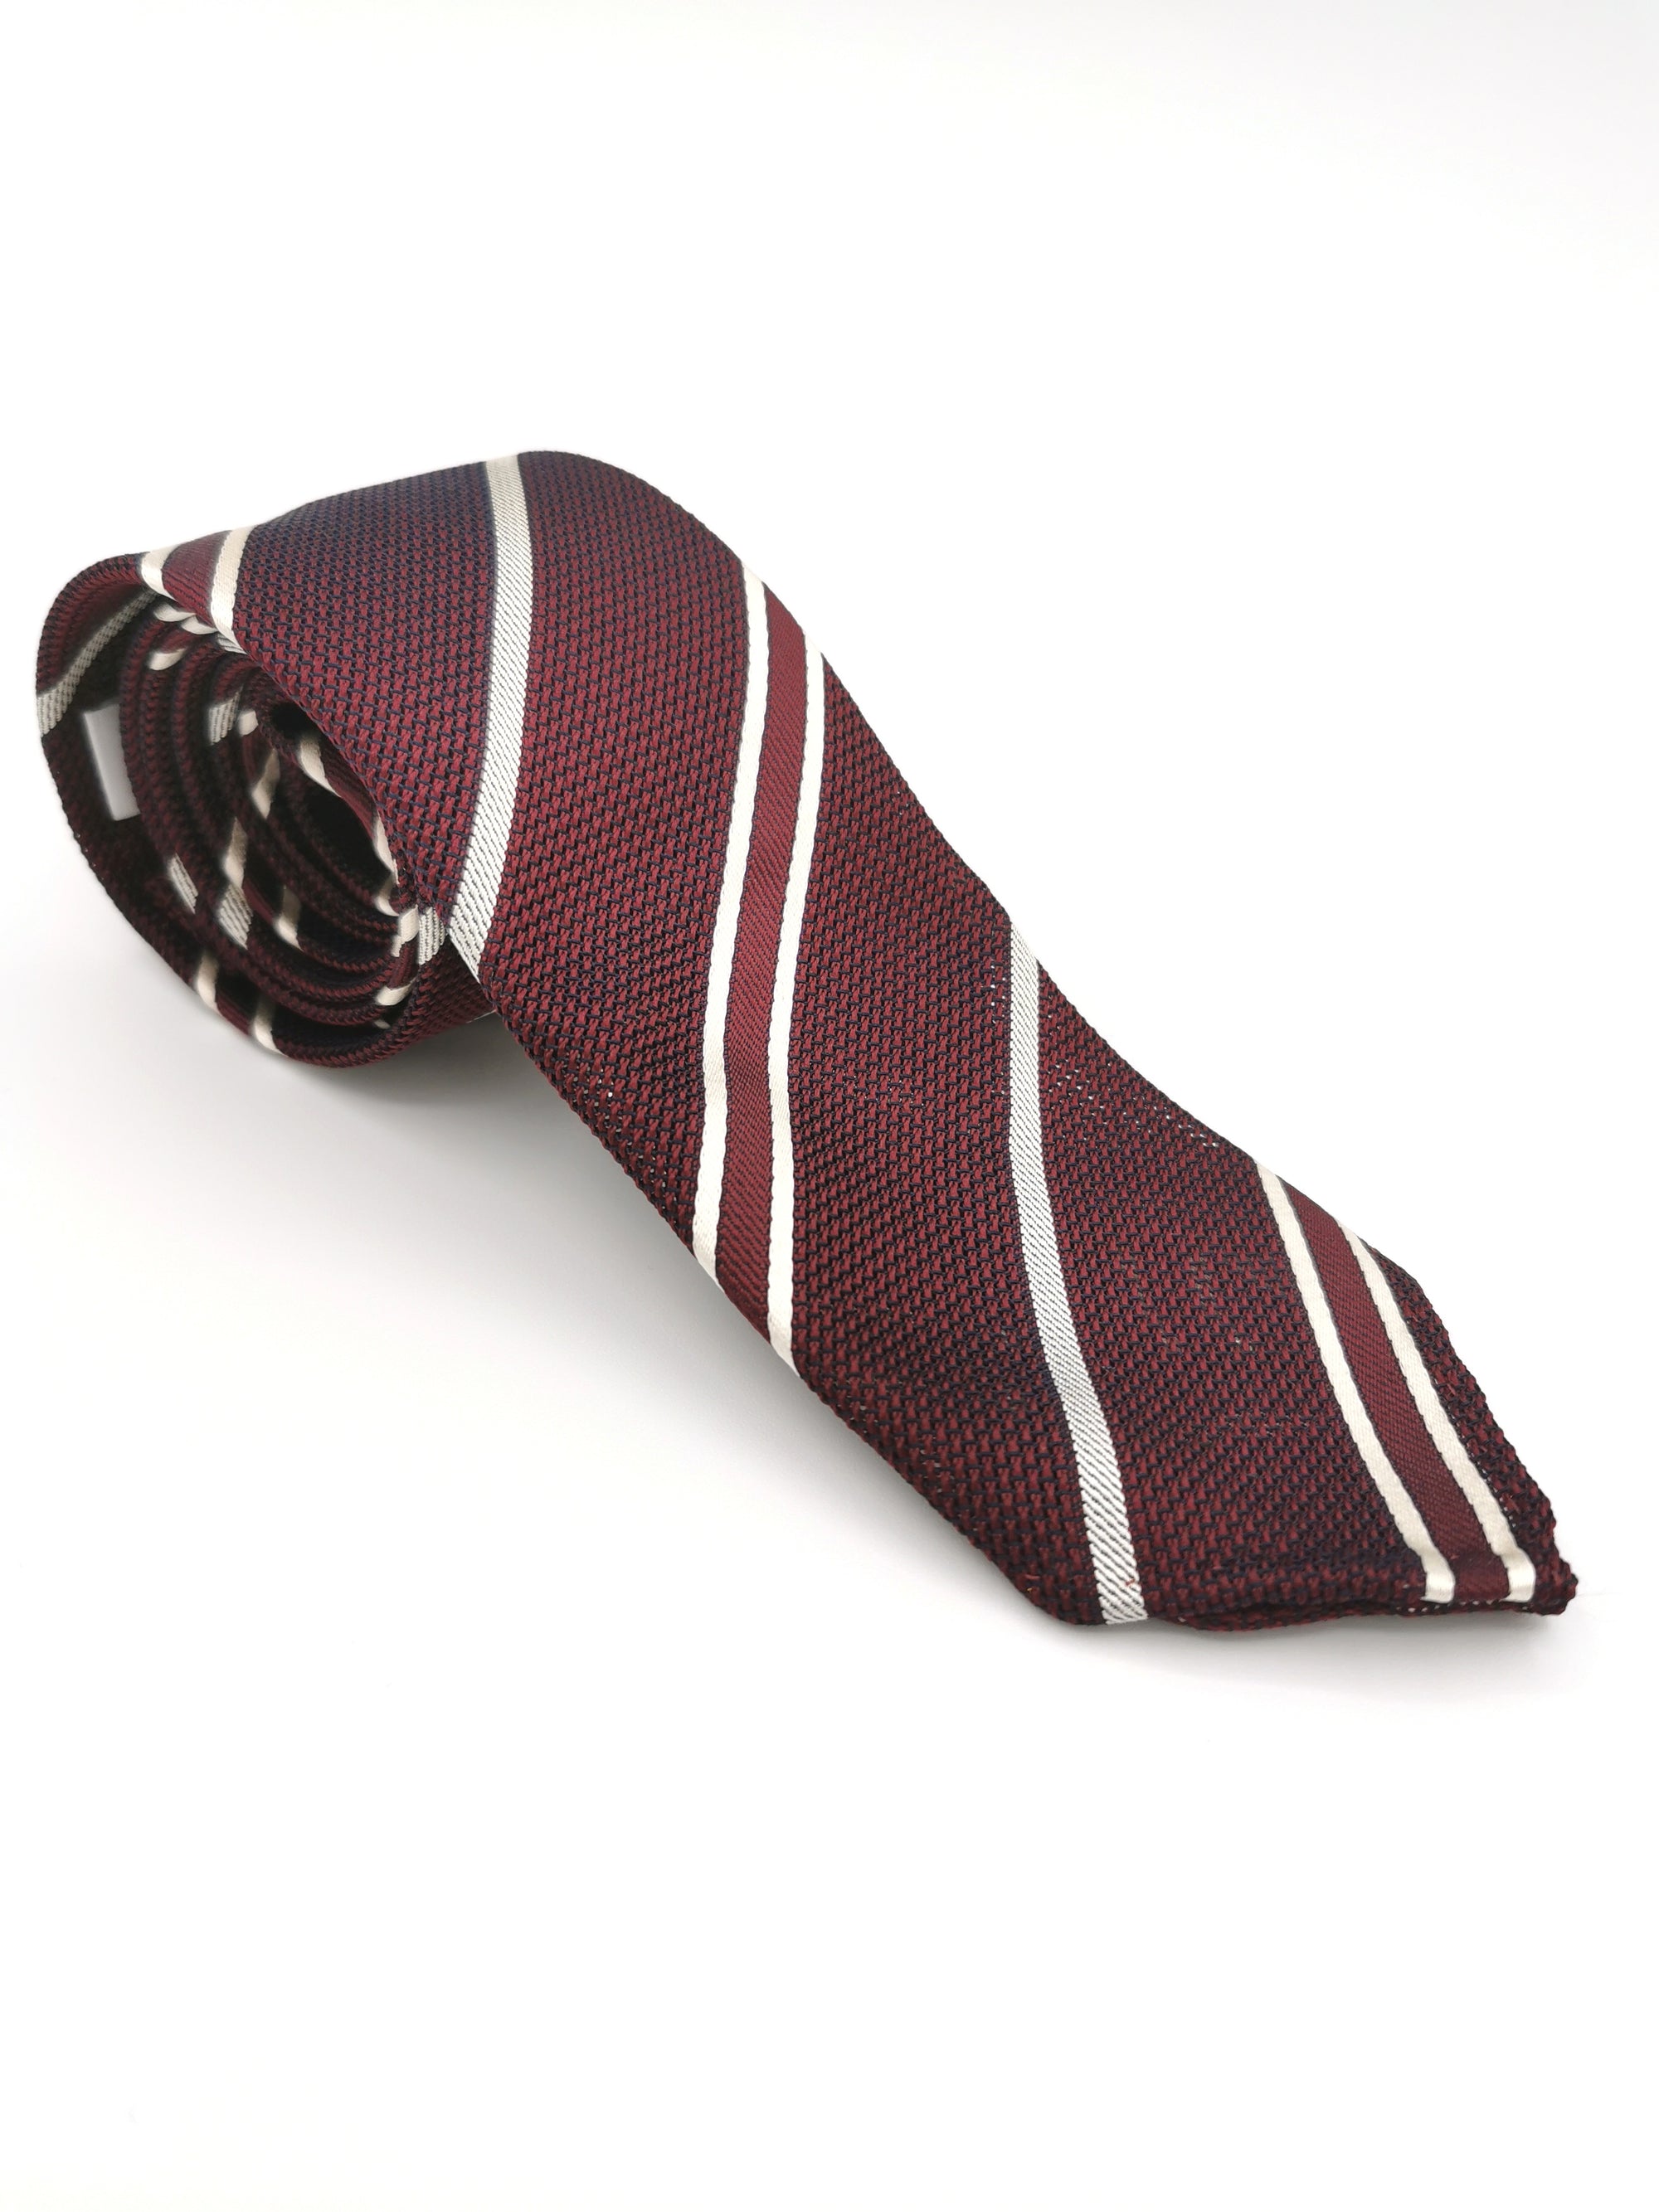 Ferala Striped Tie in Grenadine Silk